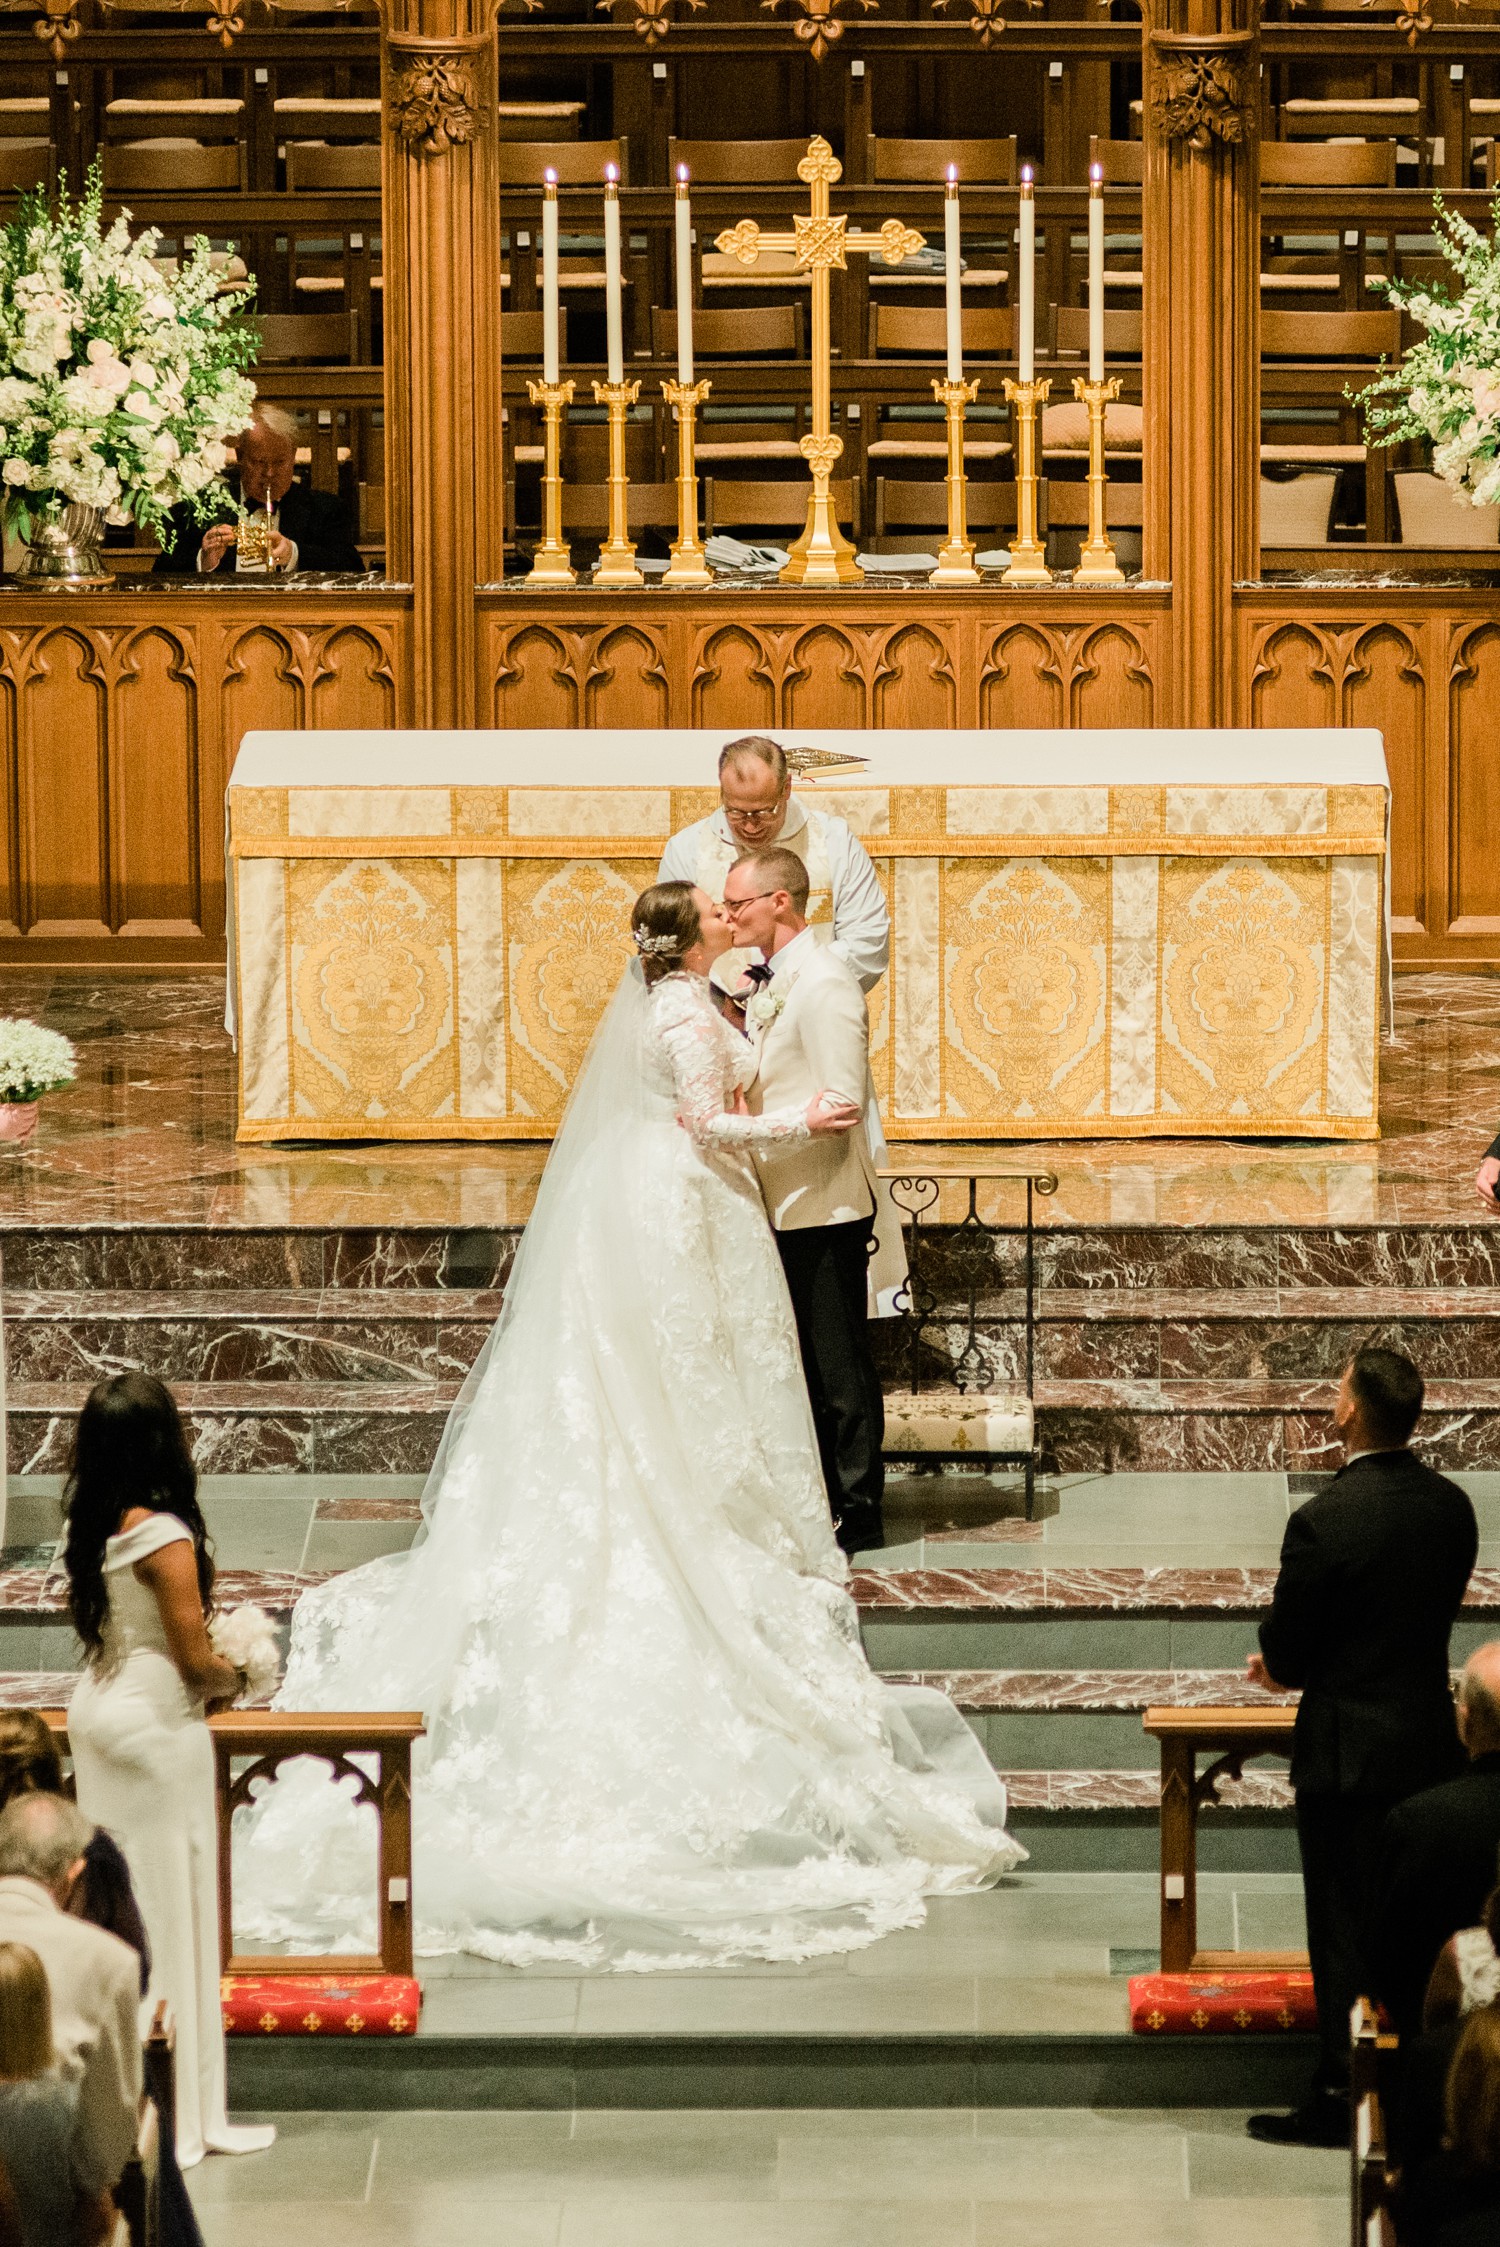 Wedding Ceremony at St. Martin's Church